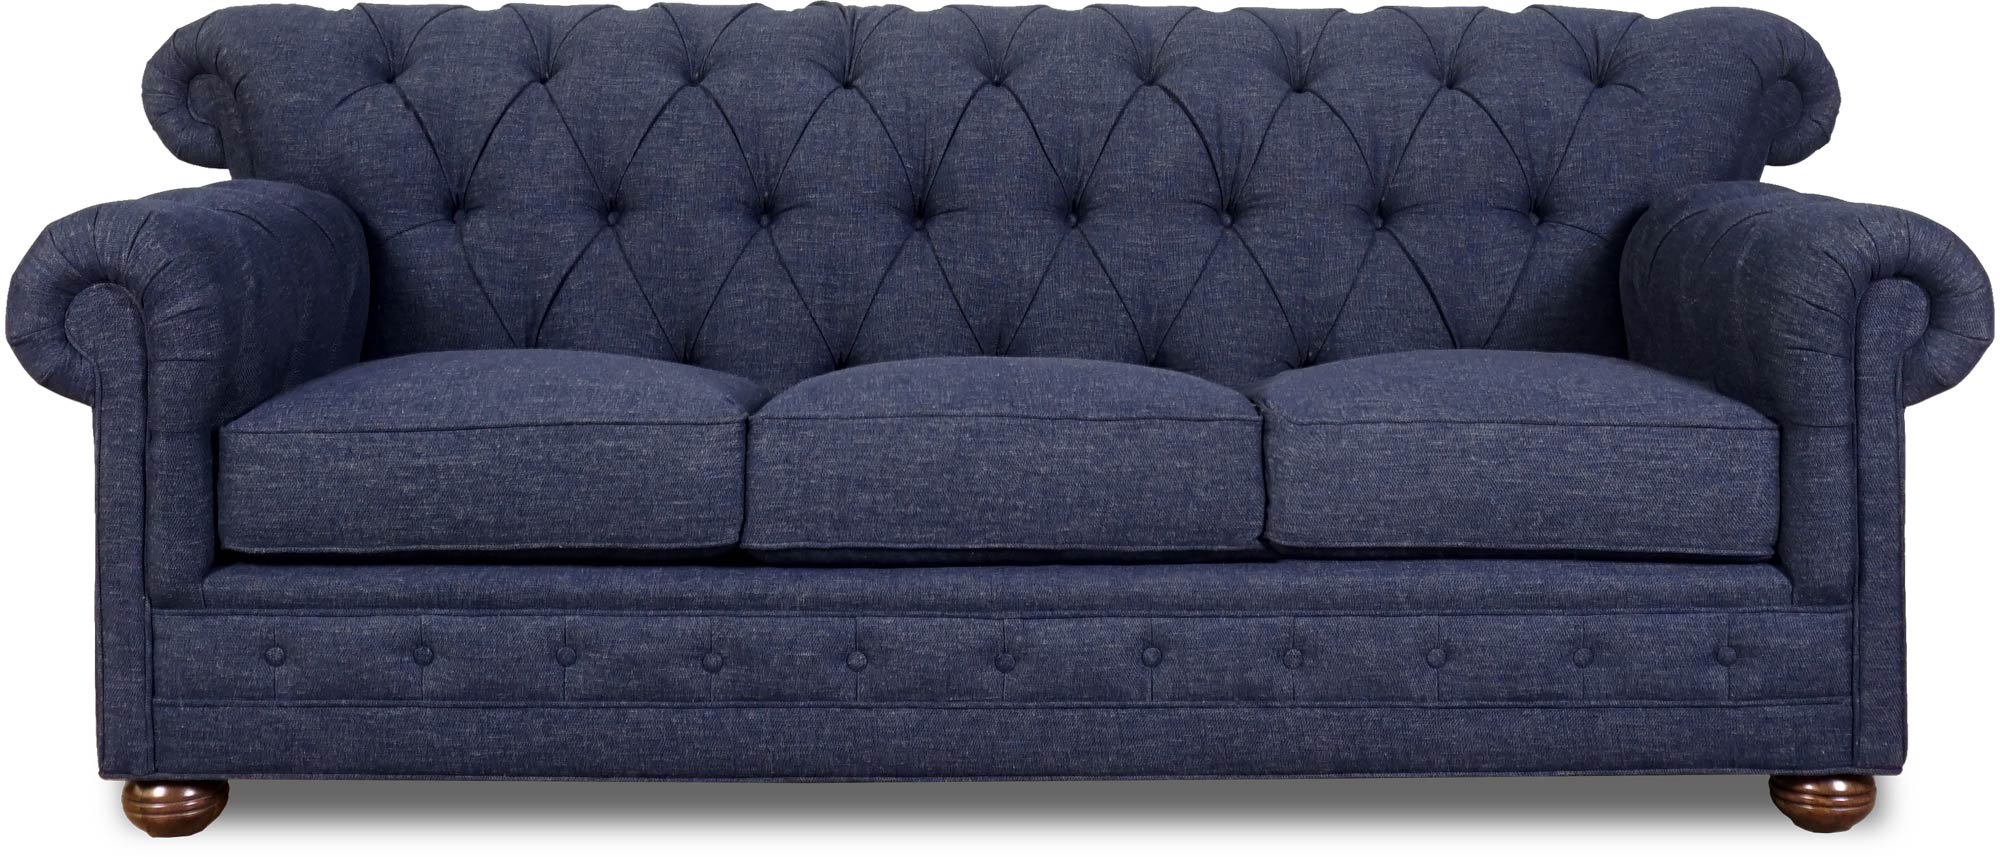 96 Sylvester sofa in Varick Indigo fabric